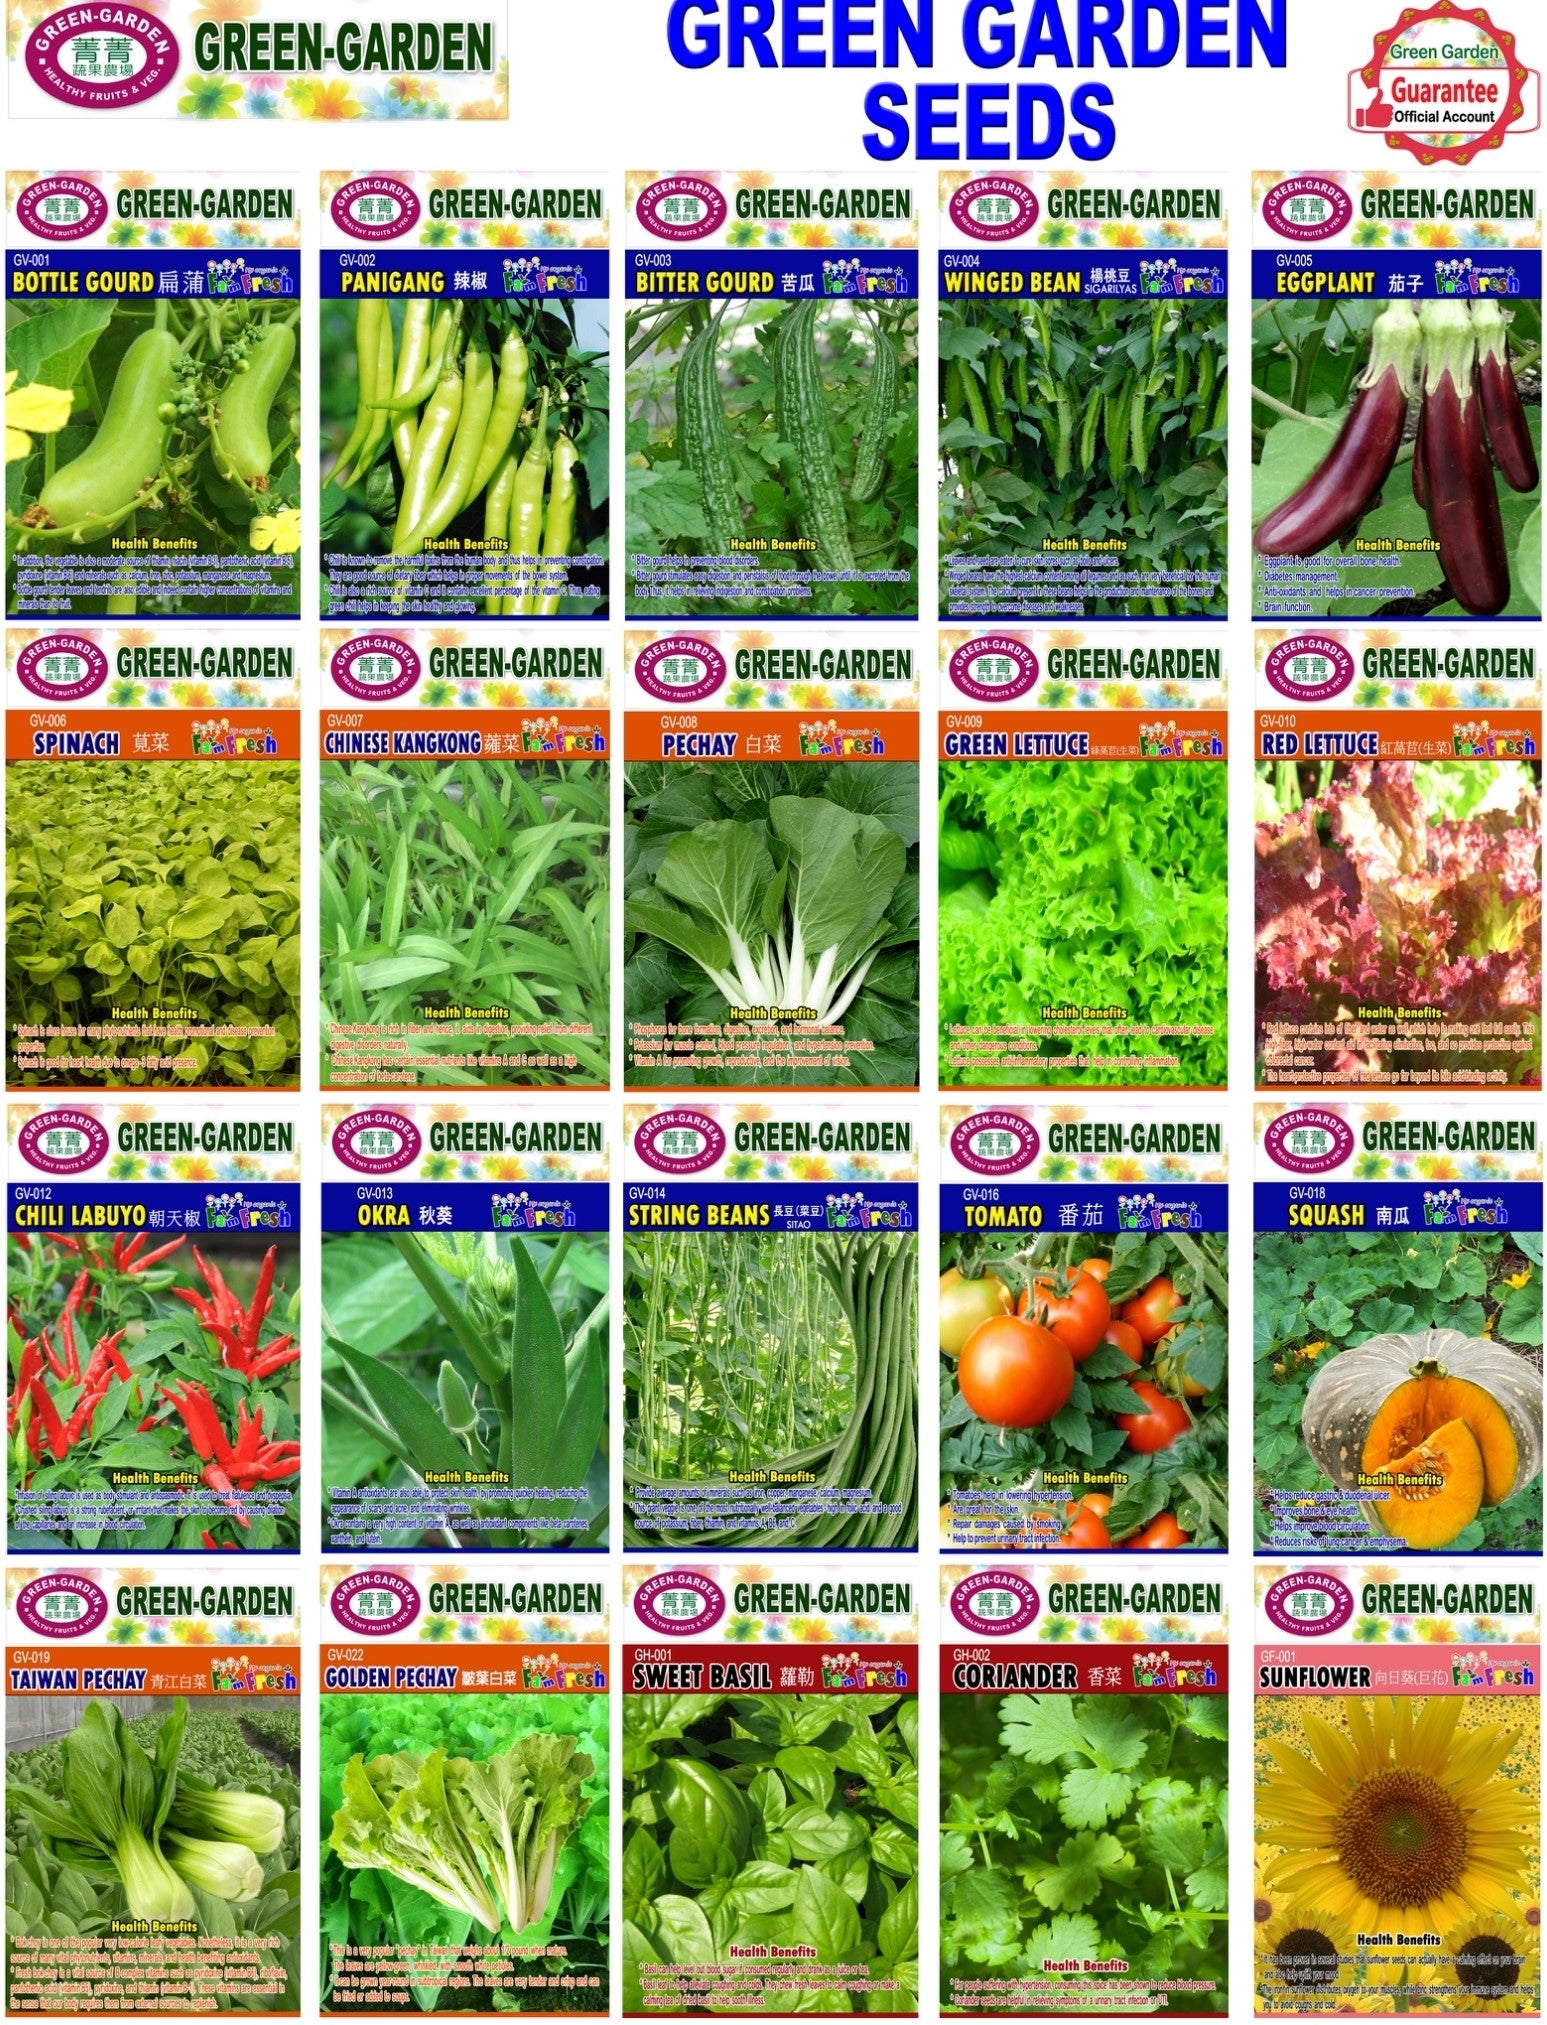 Green Garden Vegetable Seeds (GV-008 Pechay)